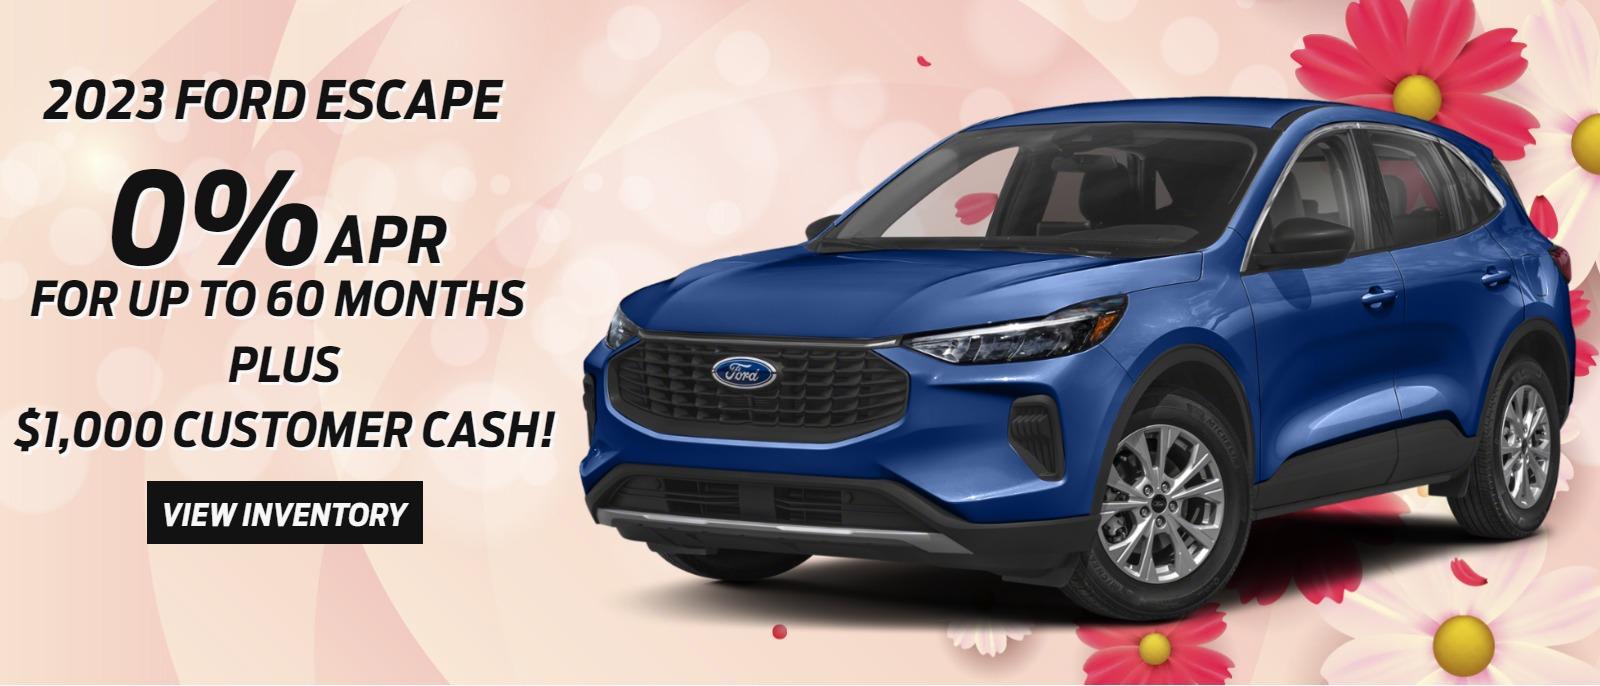 2023 Ford Escape: 0% APR for 60 Months Plus $1,000 Customer Cash